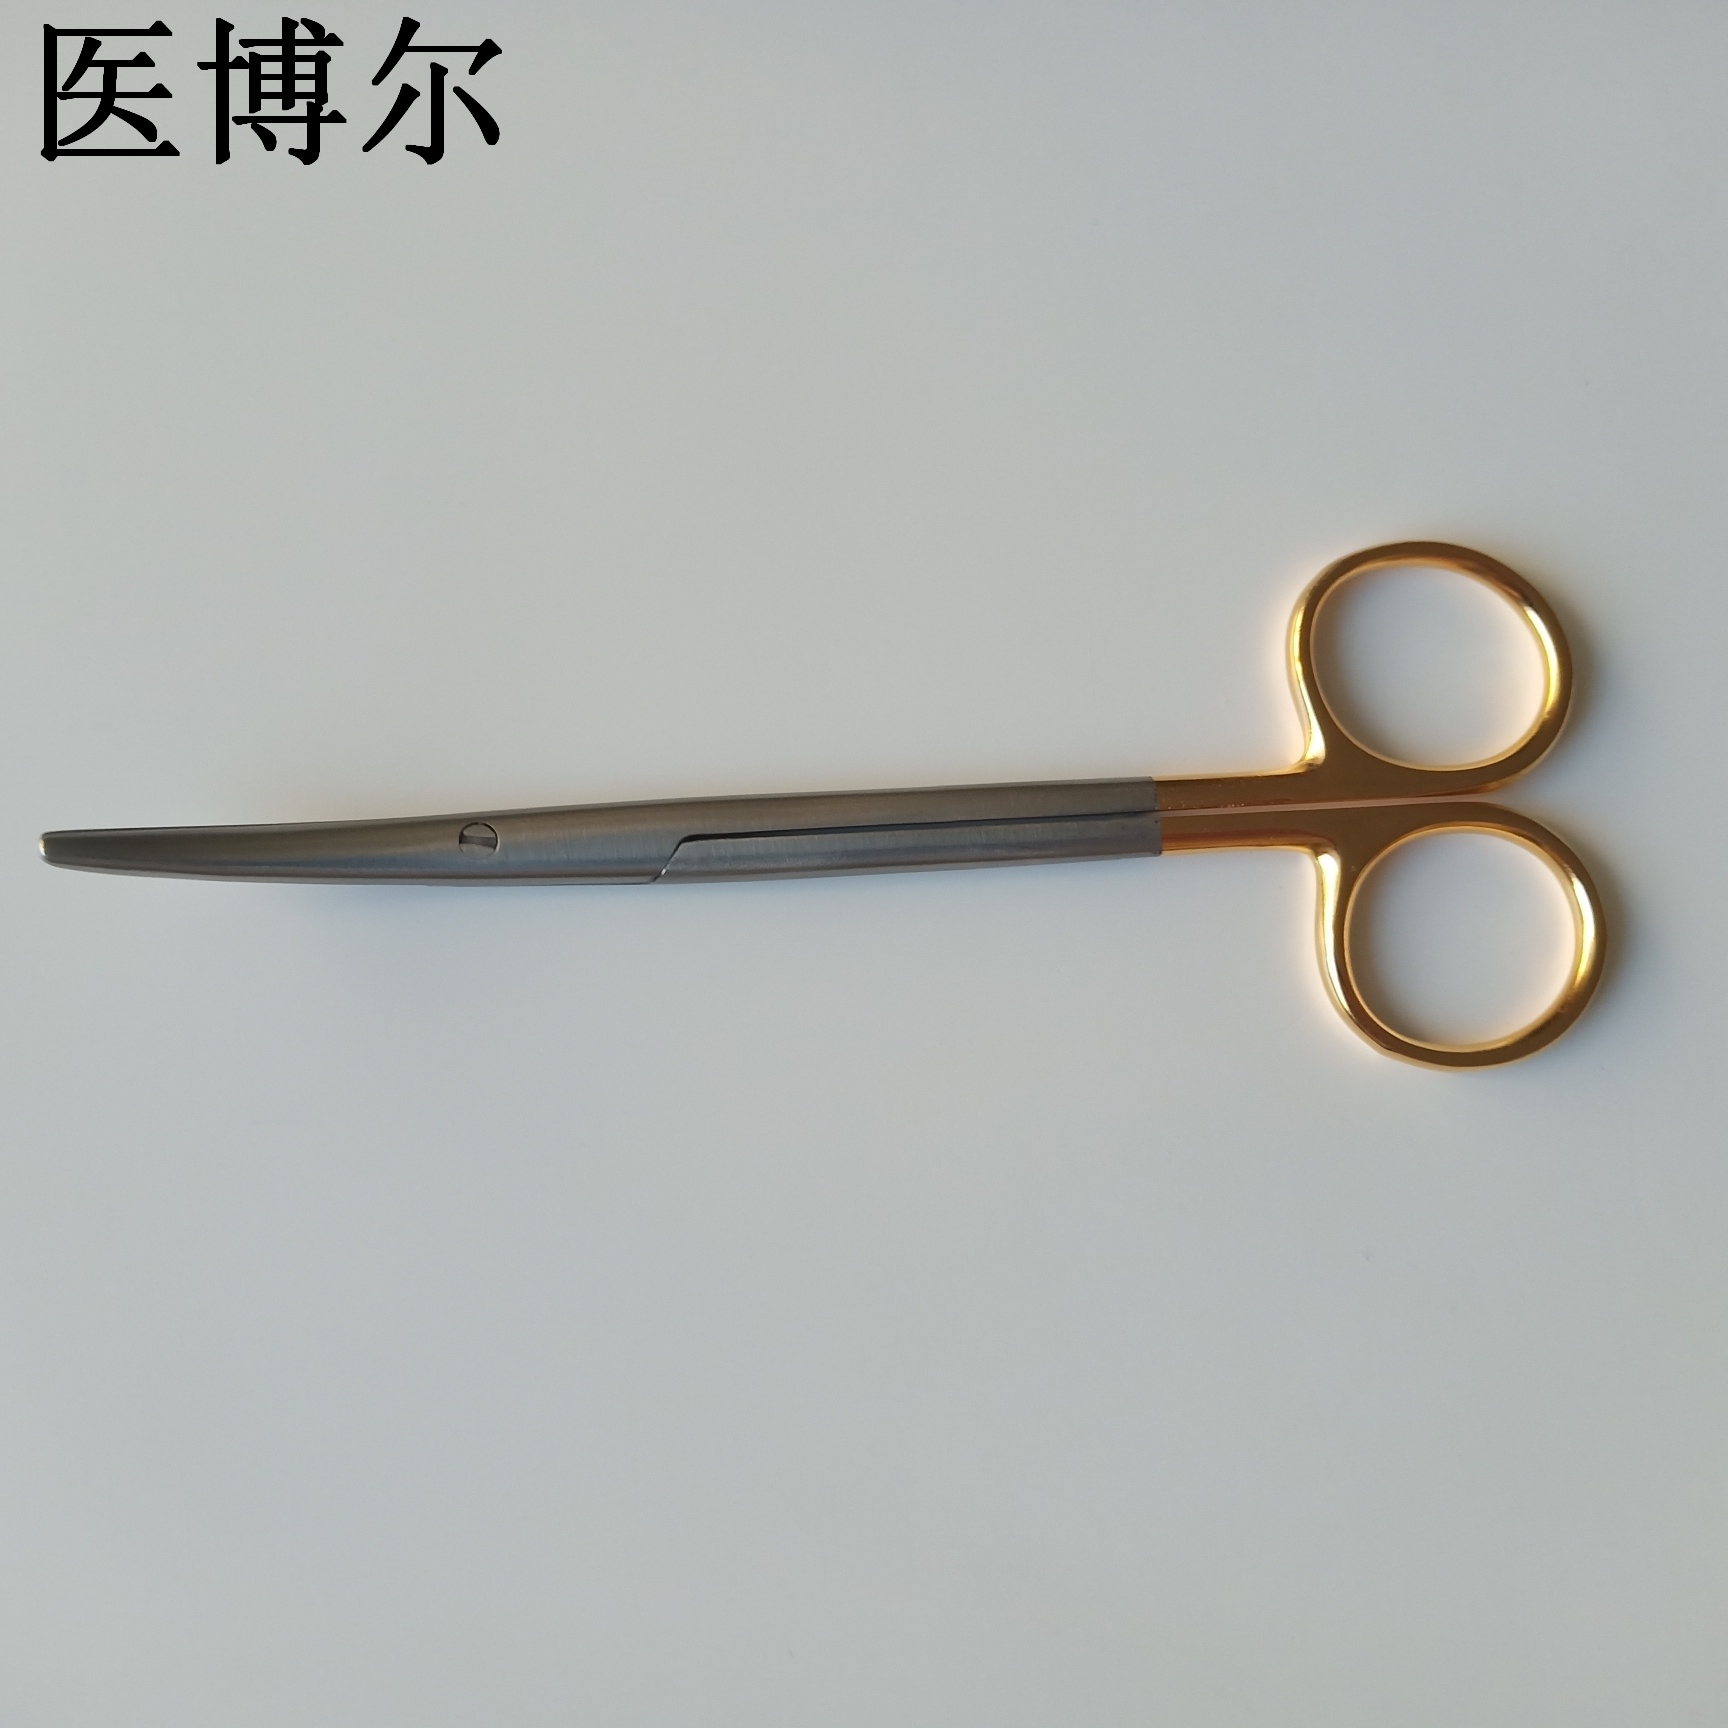 14cm精细弯圆金柄剪刀 (7).jpg